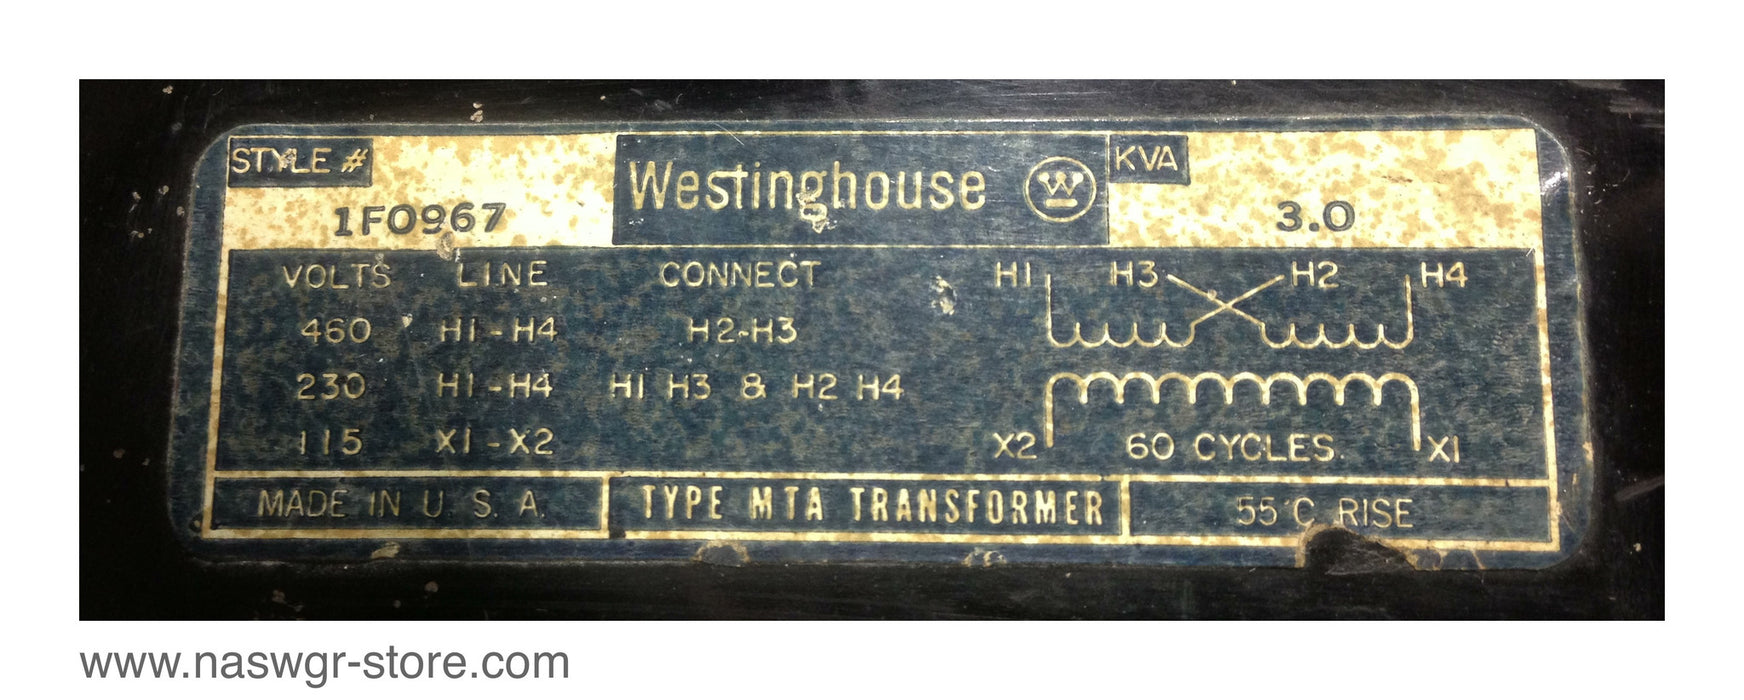 1F0967 , Westinghouse 1F0967 Transformer , 60 Cycle , 3.0 KVA , 460V 230V 115V , PN: 1F0967